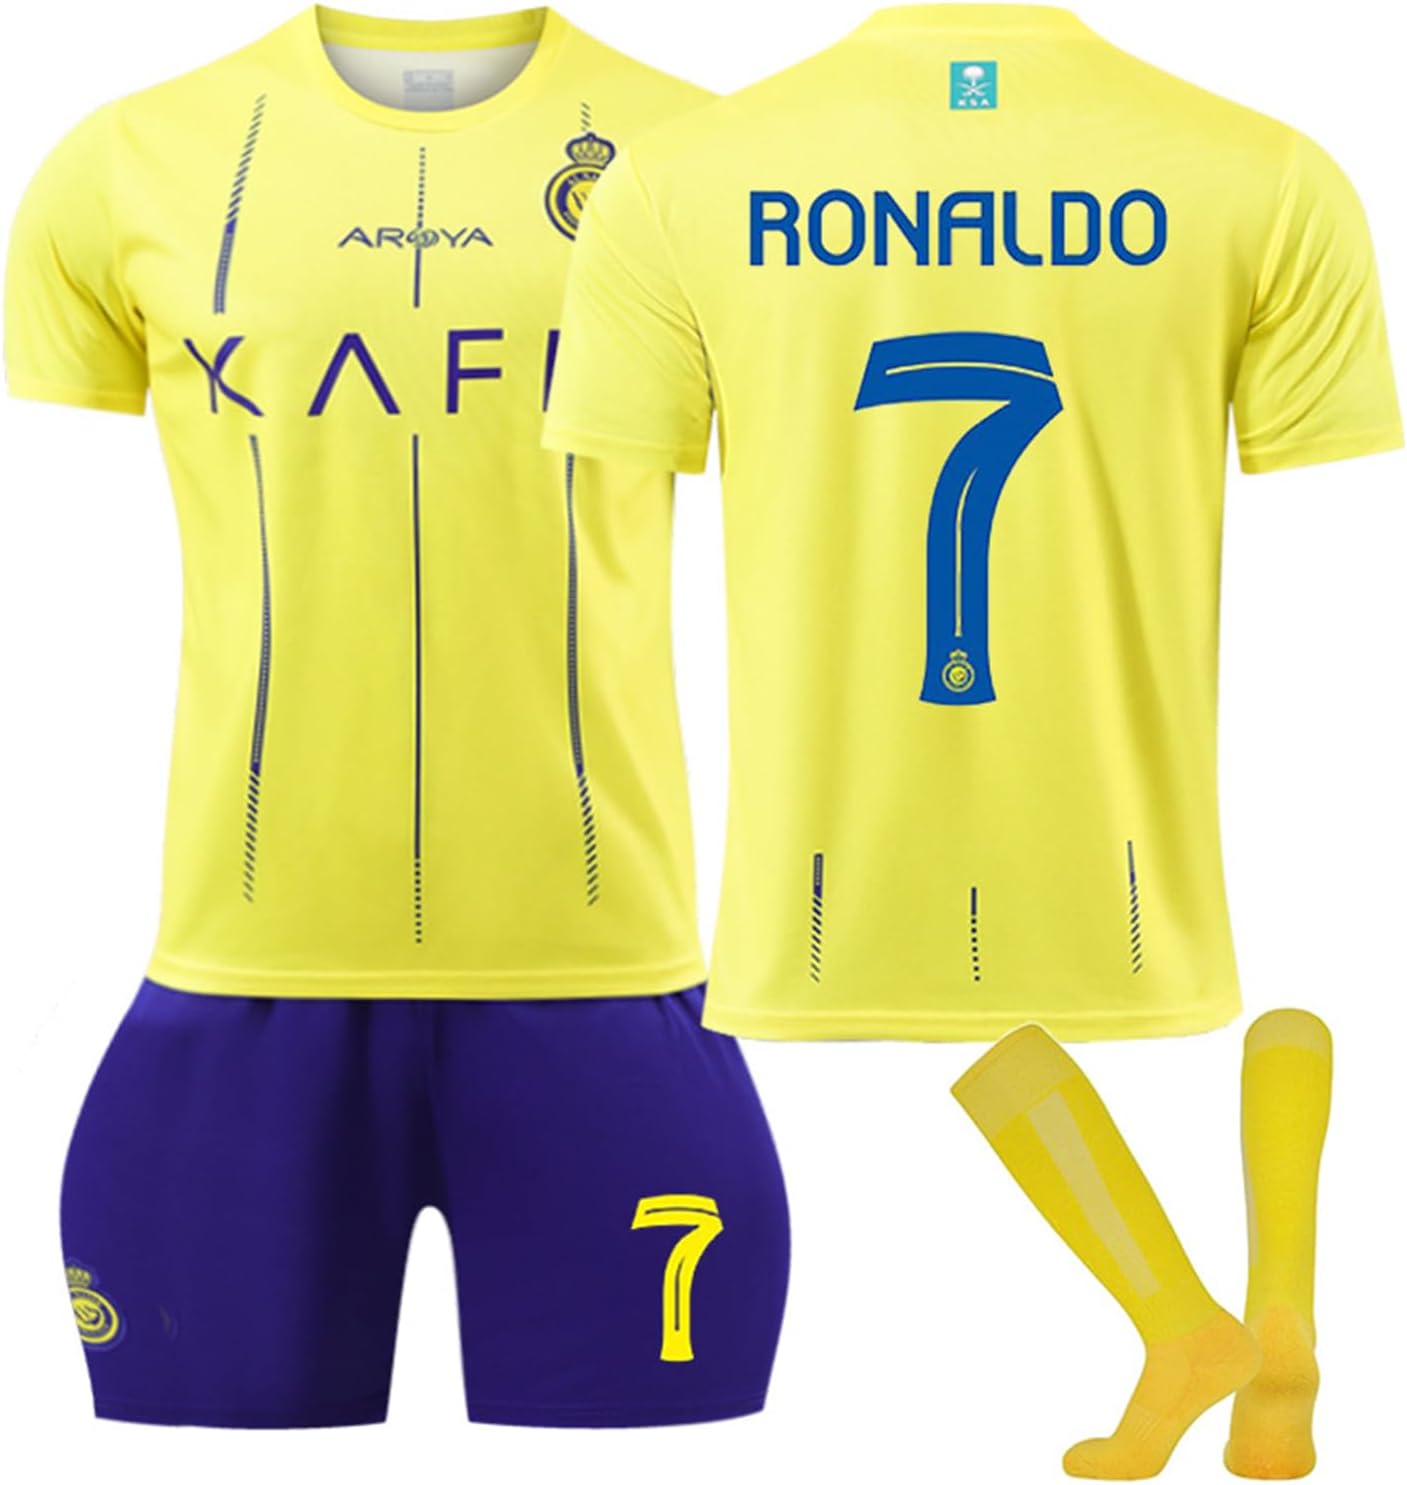 HI-FINE Kids Soccer Jersey,Ronaldo Jersey Shirts,Boys Soccer Jersey Set,Soccer clothing,Sport Gift Set for Youth